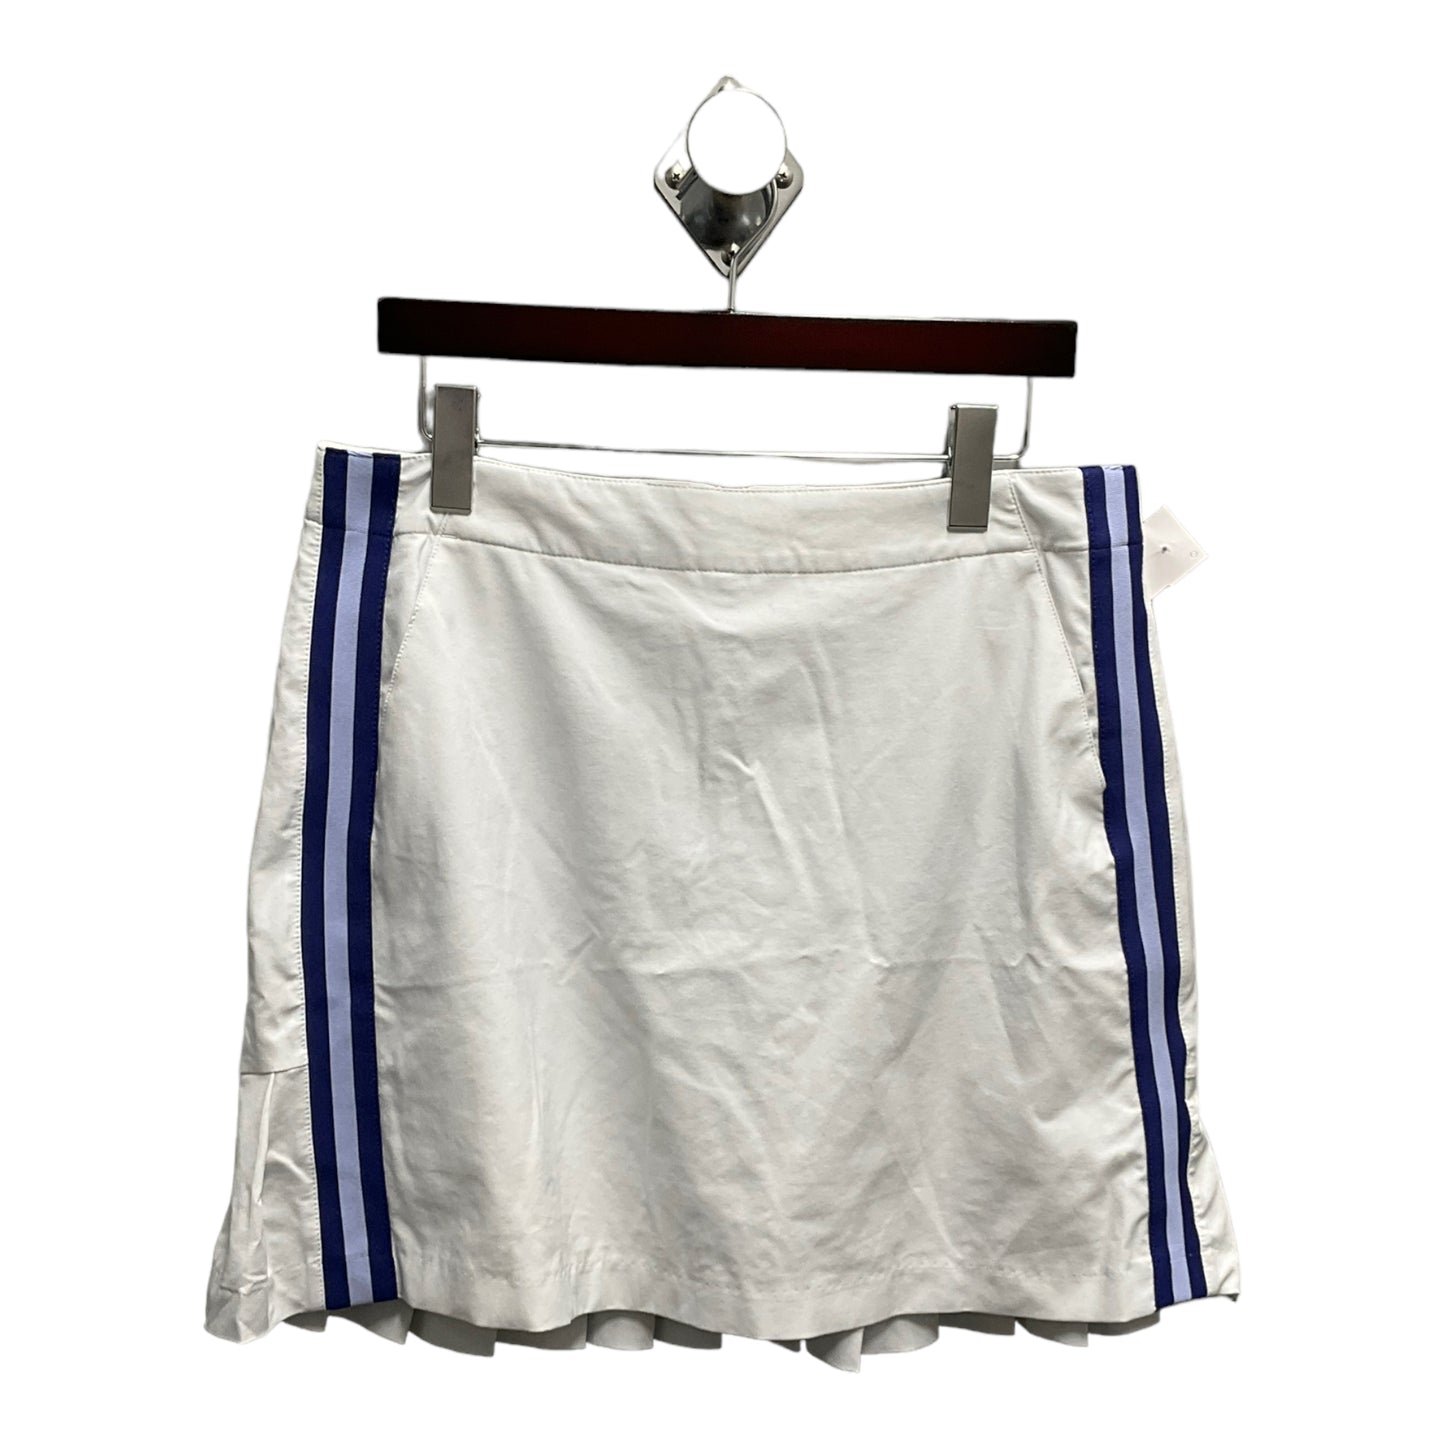 Athletic Skirt Skort By Lady Hagen  Size: M